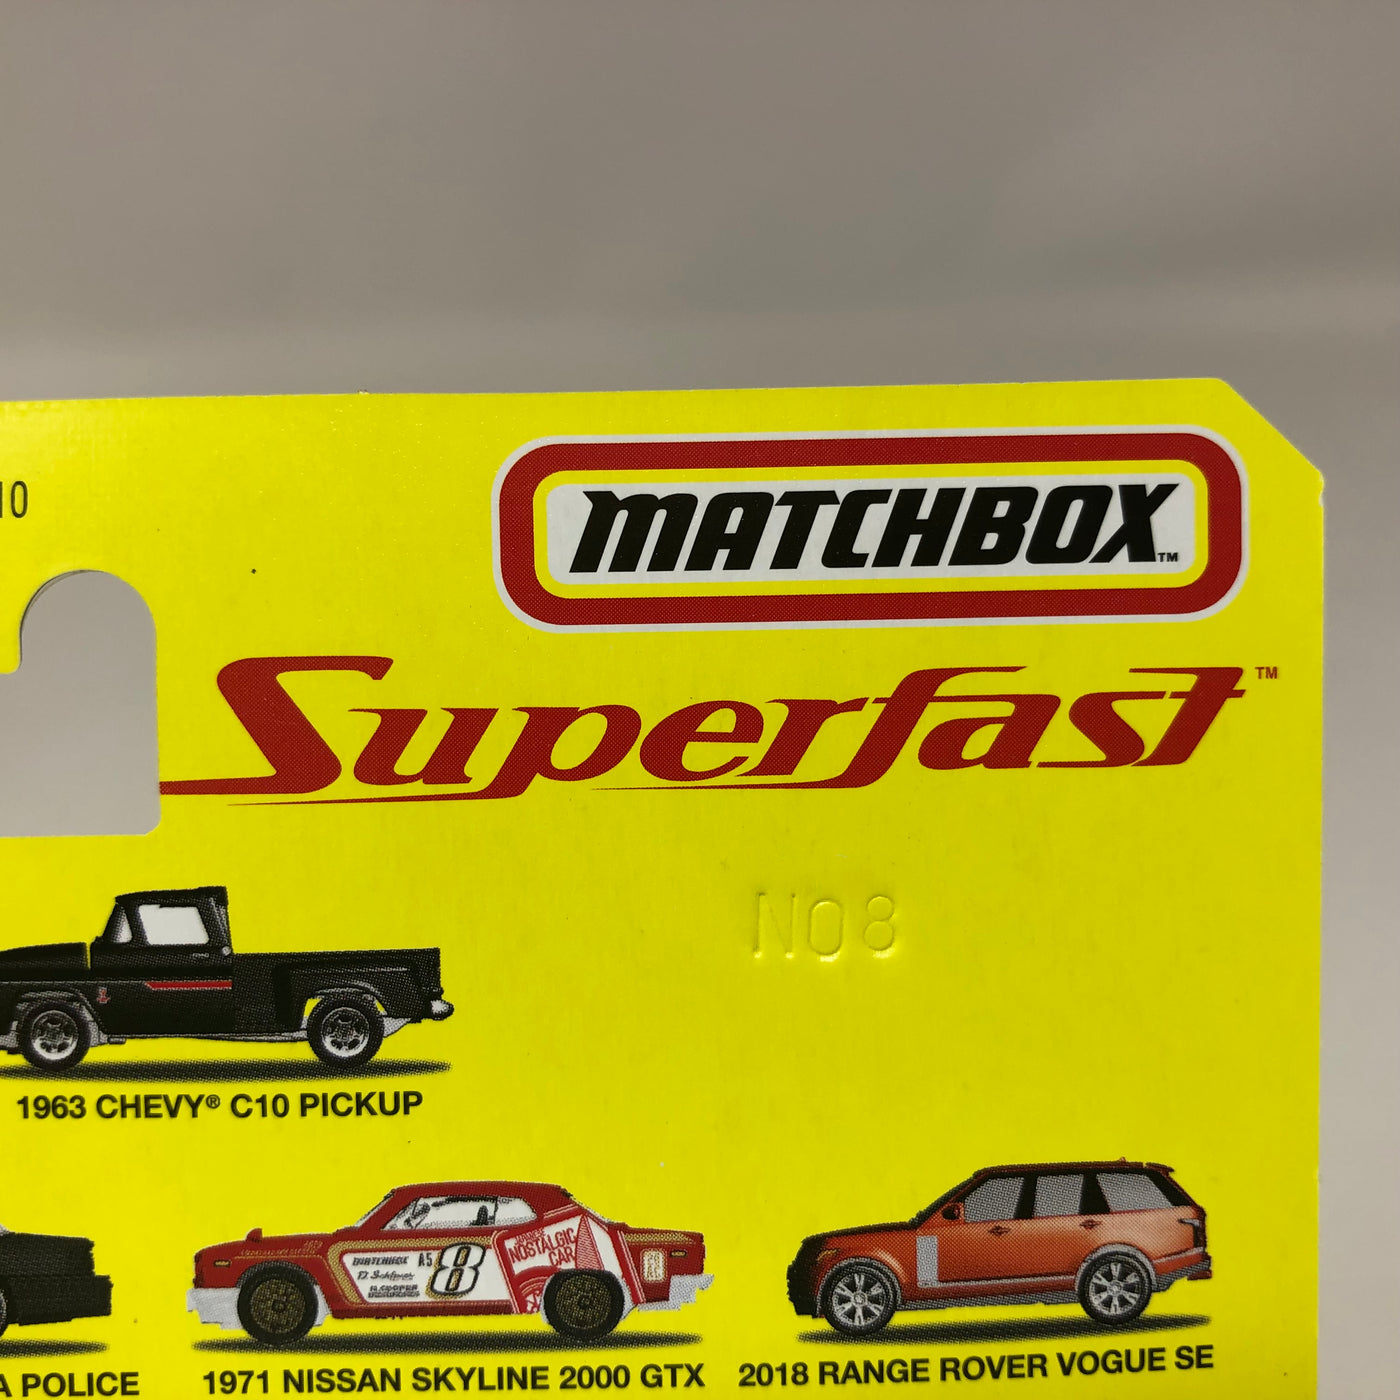 Matchbox Superfast!